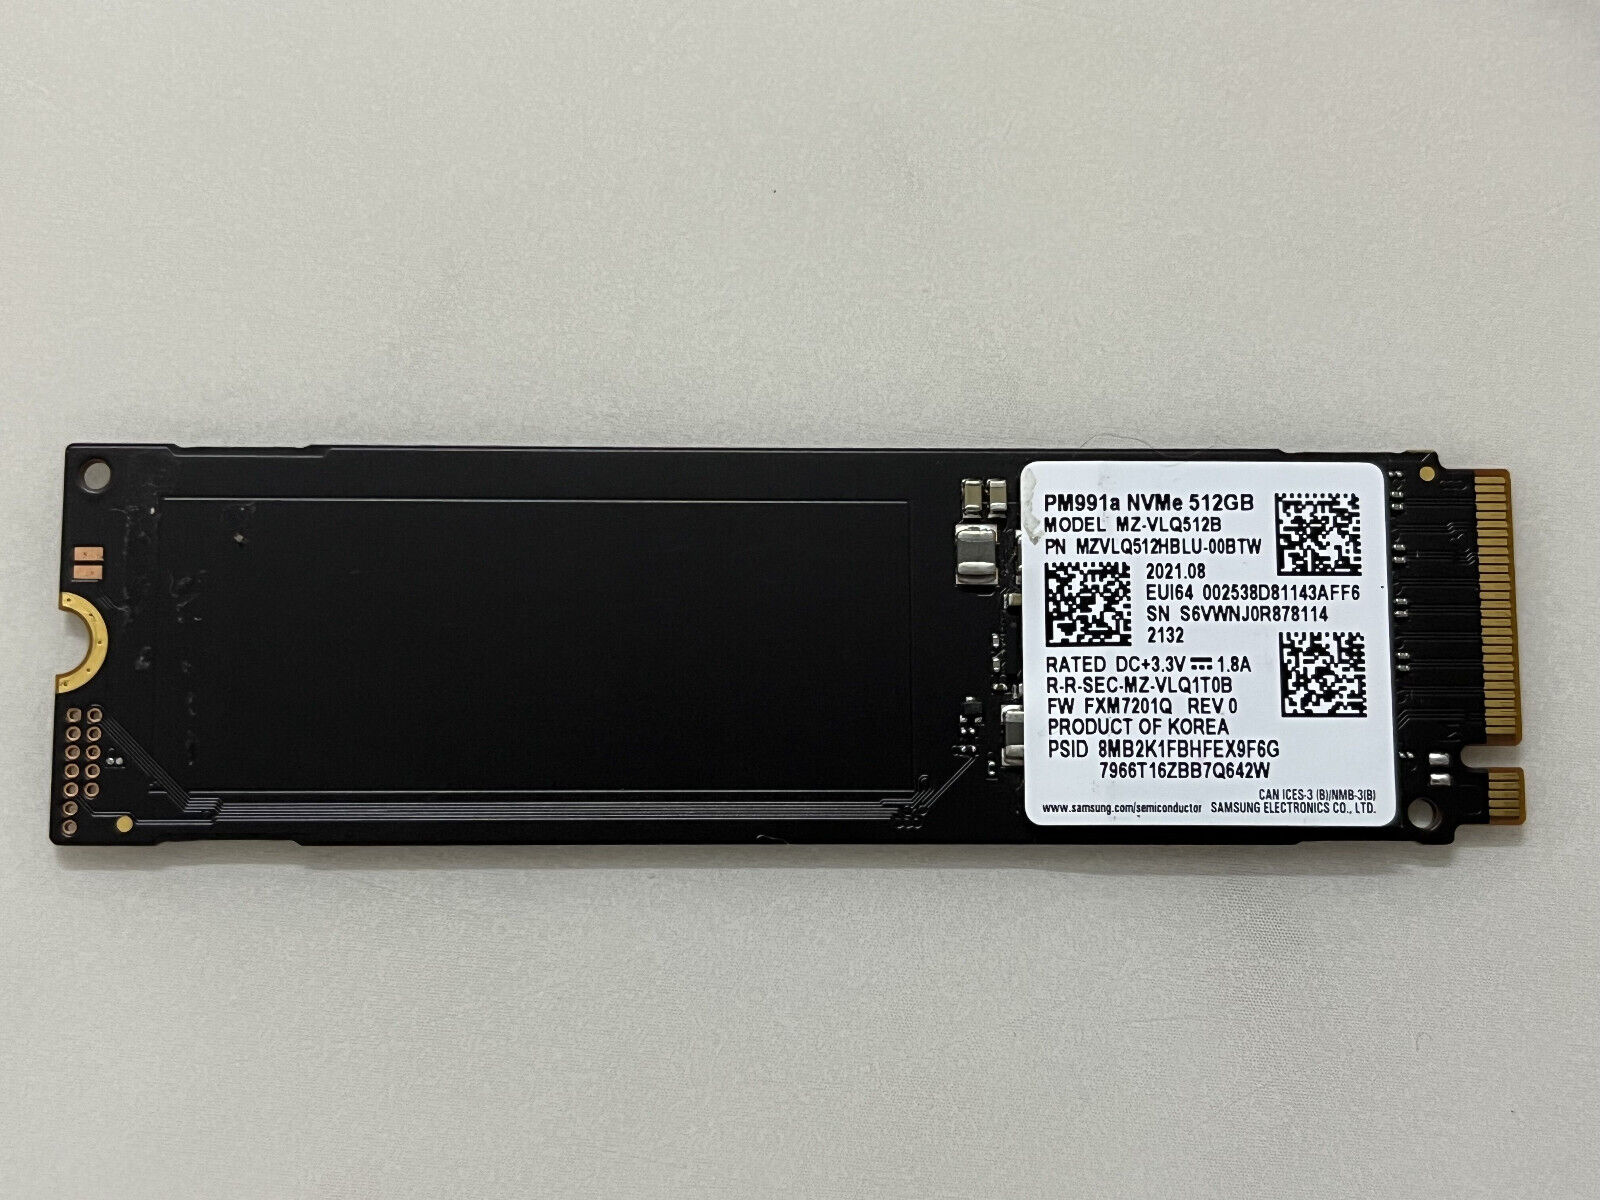 Samsung 512GB PM991a M.2 PCIe NVMe SSD 2280 Solid State 3100MB/s MZVLQ512HBLU